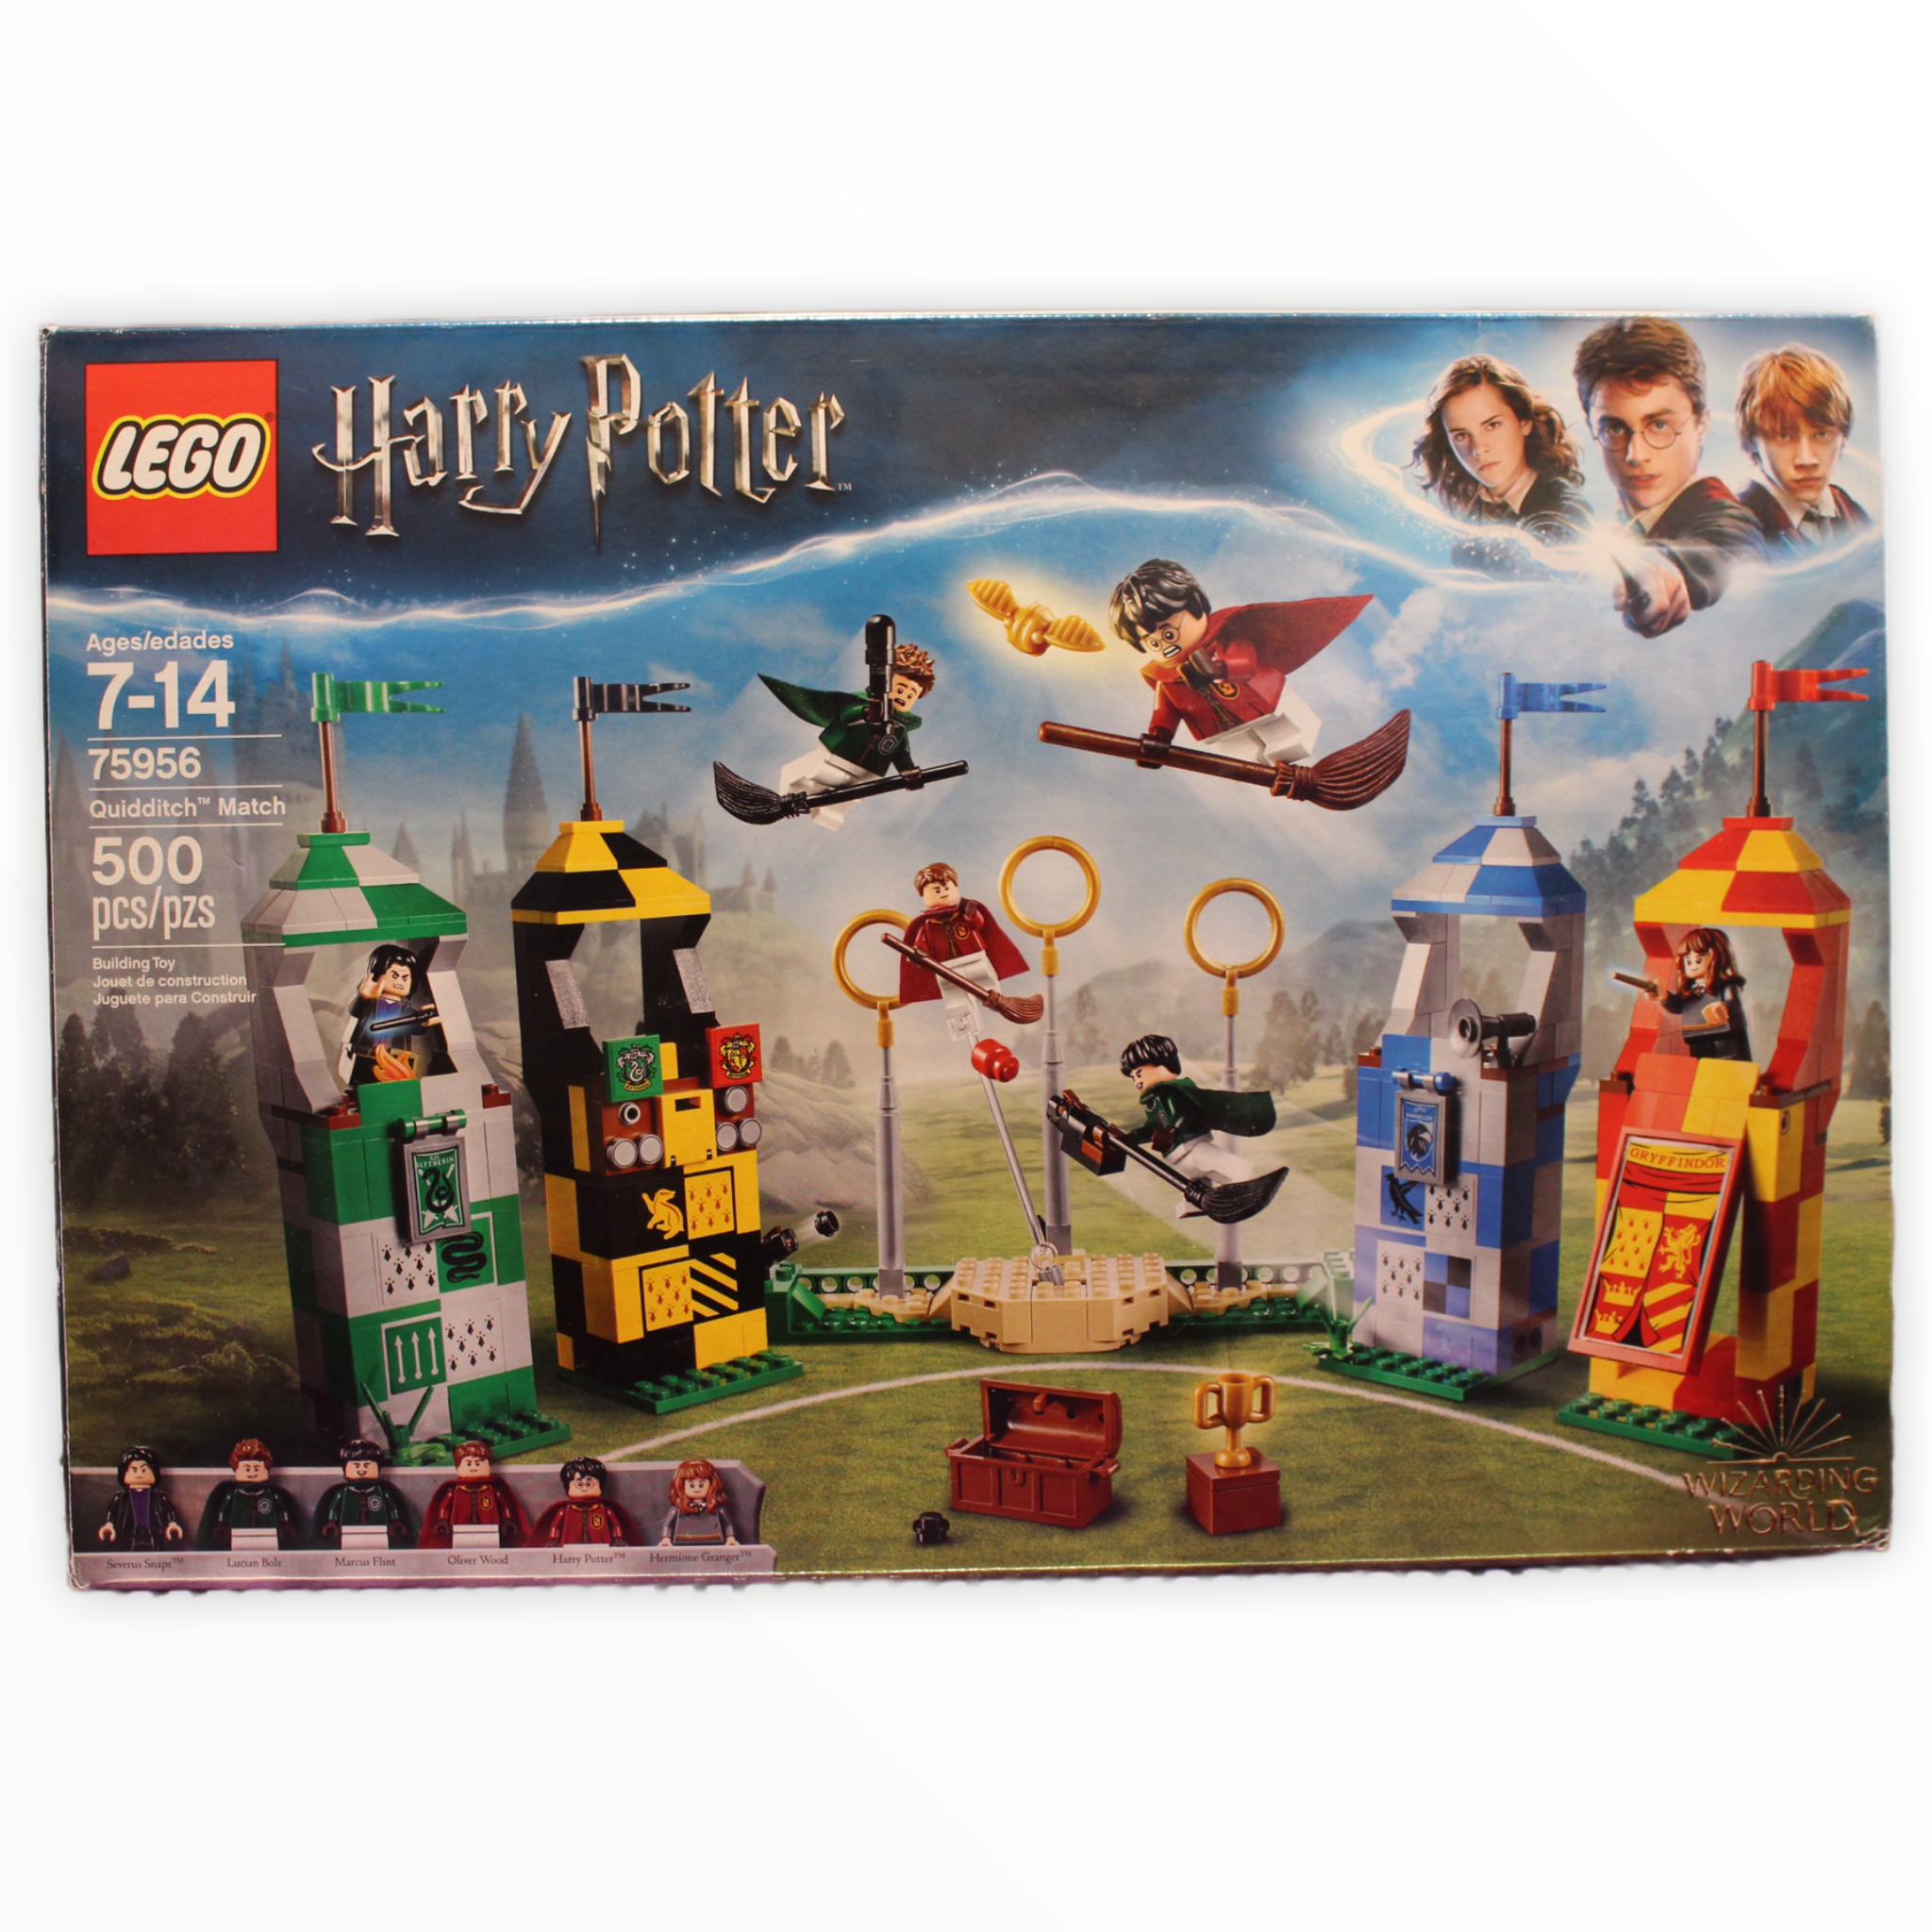 Lego Dobby elf 75968 Light Nougat Open Mouth Smile Harry Potter Minifigure  